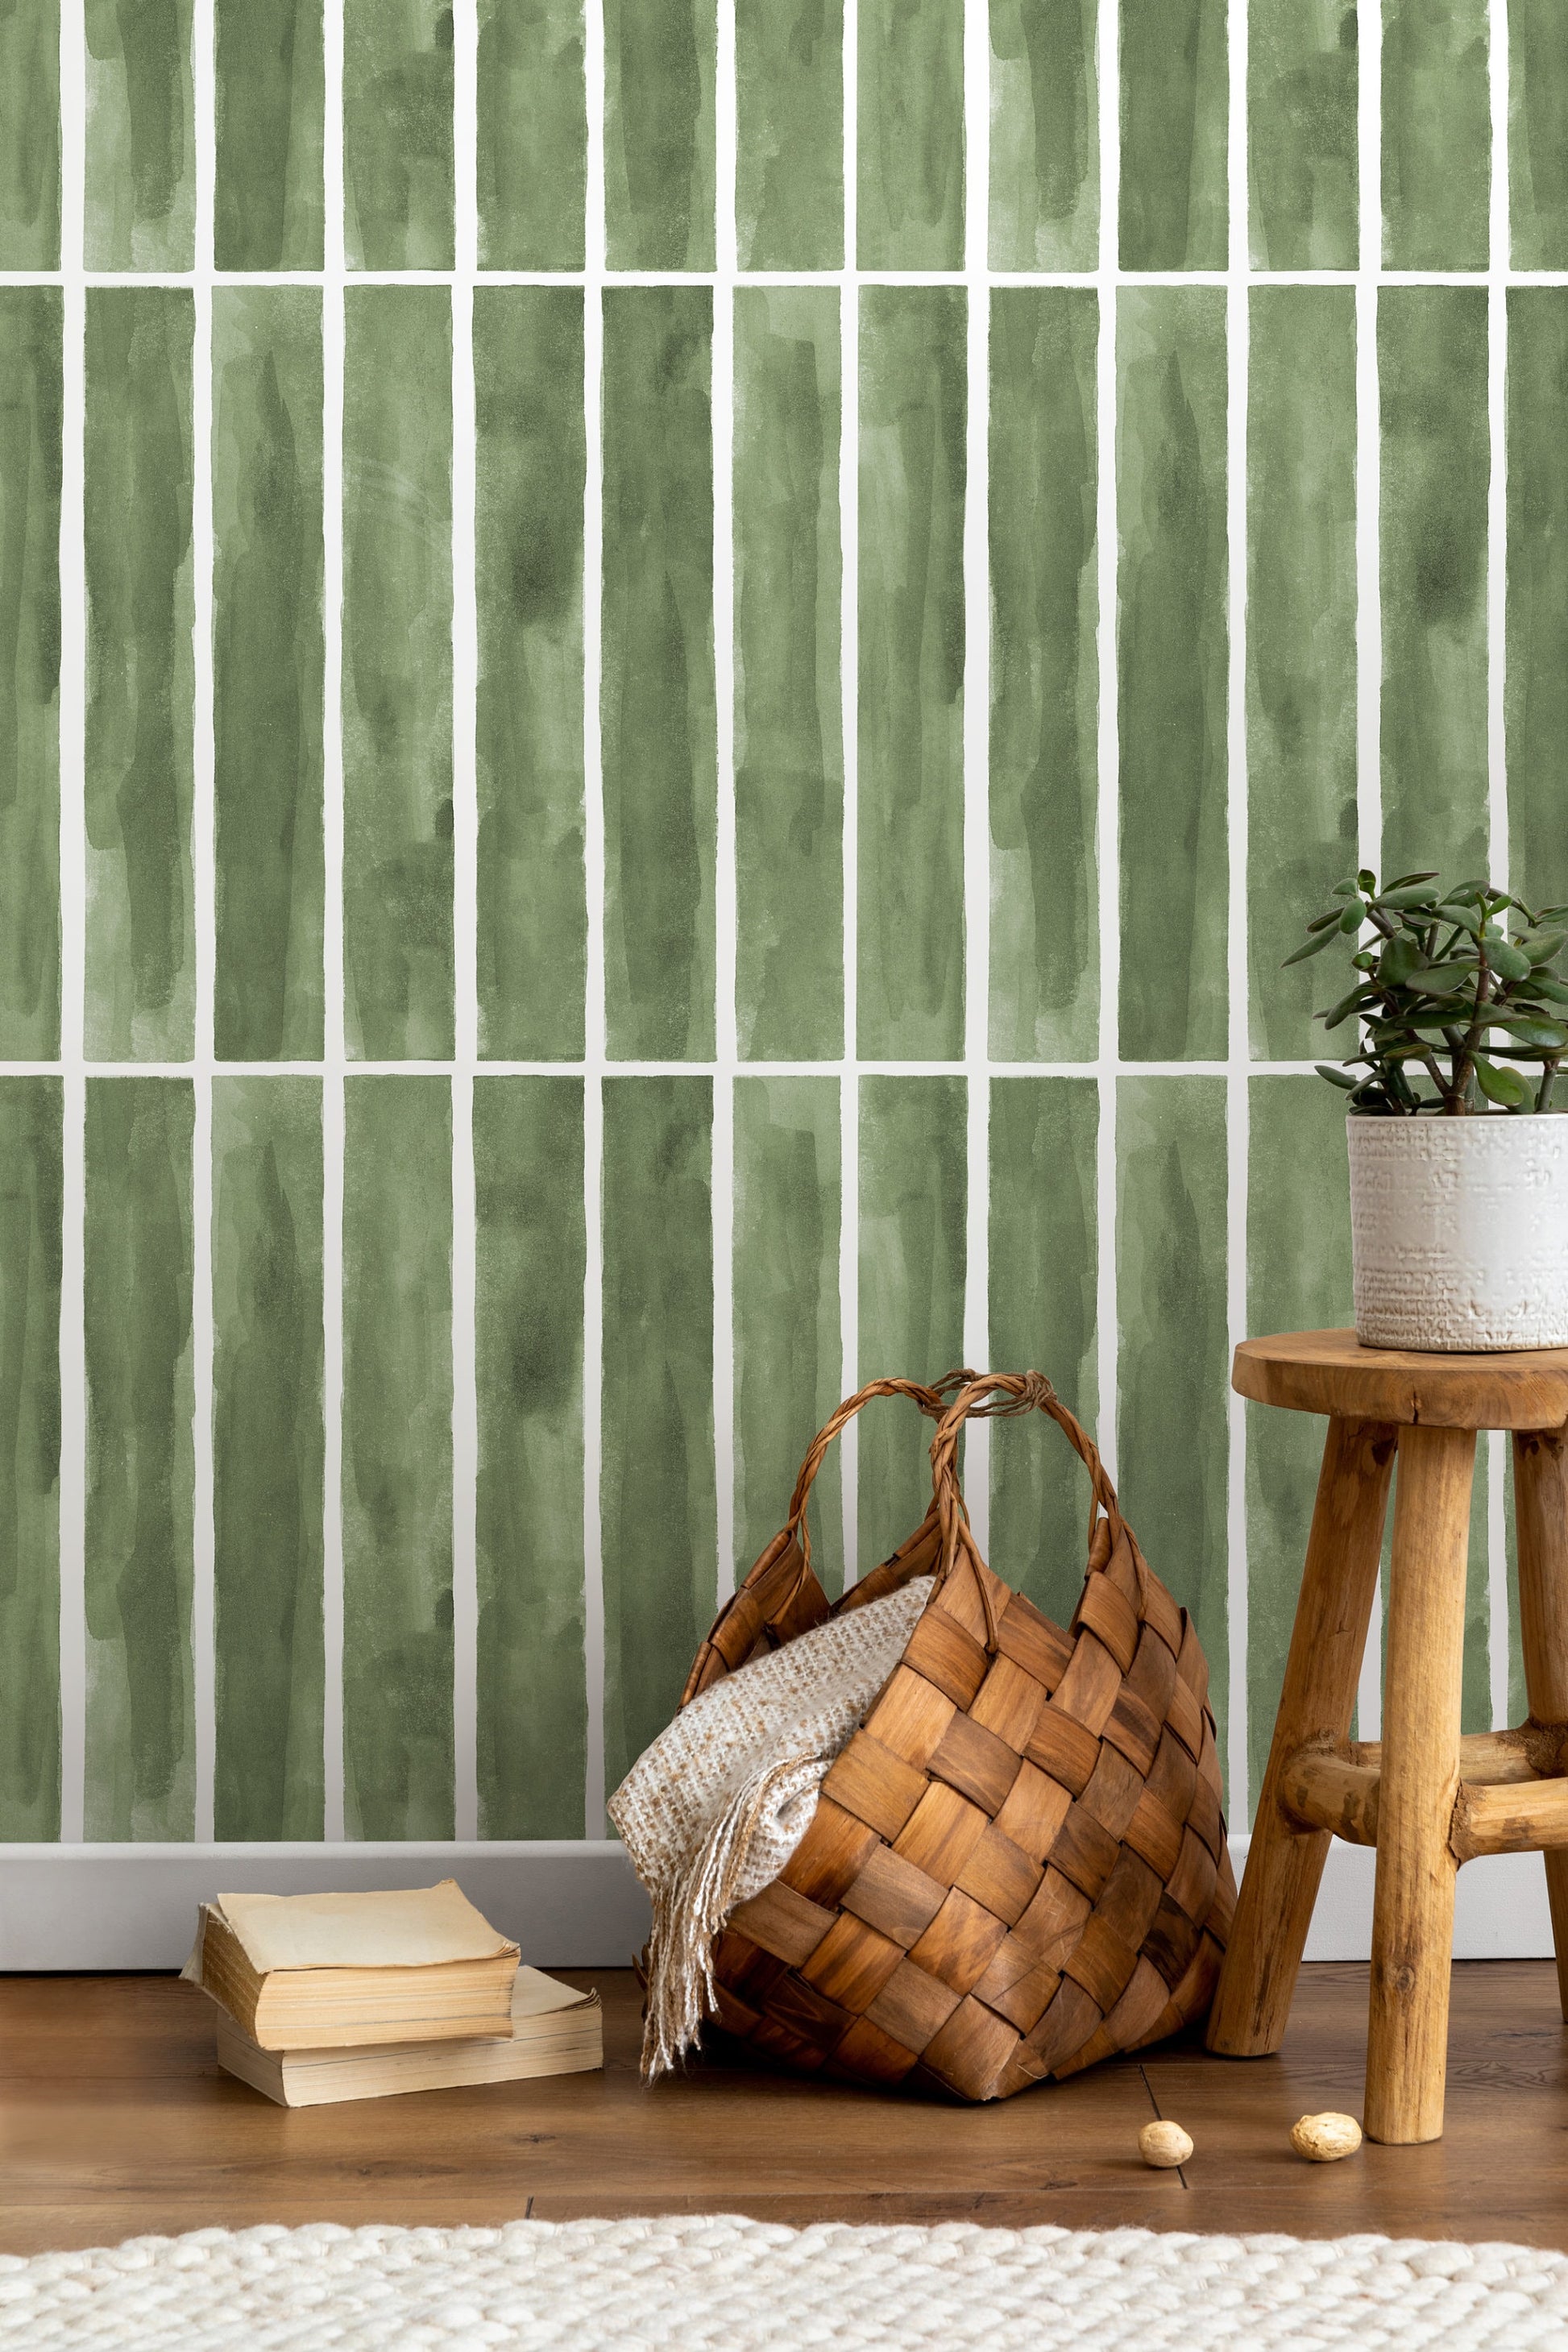 Green Modern Striped Wallpaper / Peel and Stick Wallpaper Removable Wallpaper Home Decor Wall Art Wall Decor Room Decor - D325